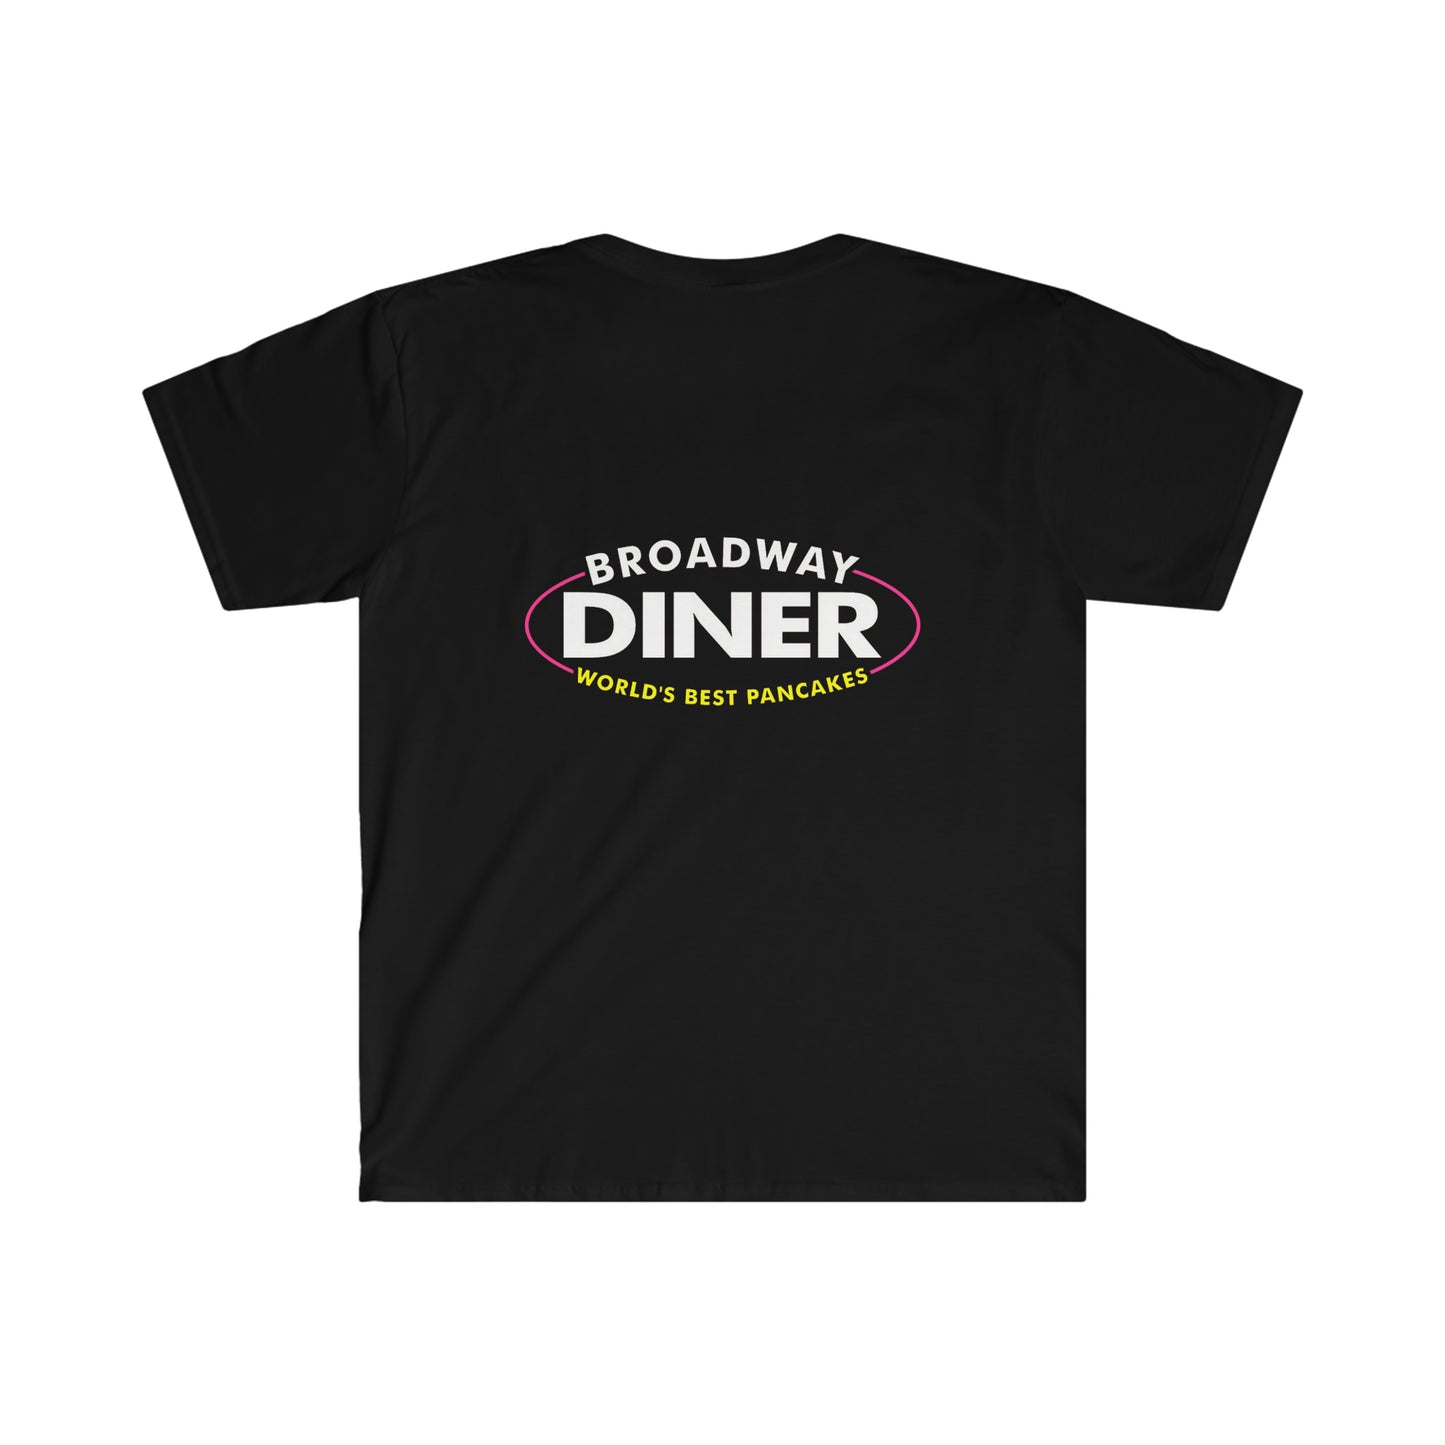 Broadway Diner Short Sleeved Team Shirt in 9 colors